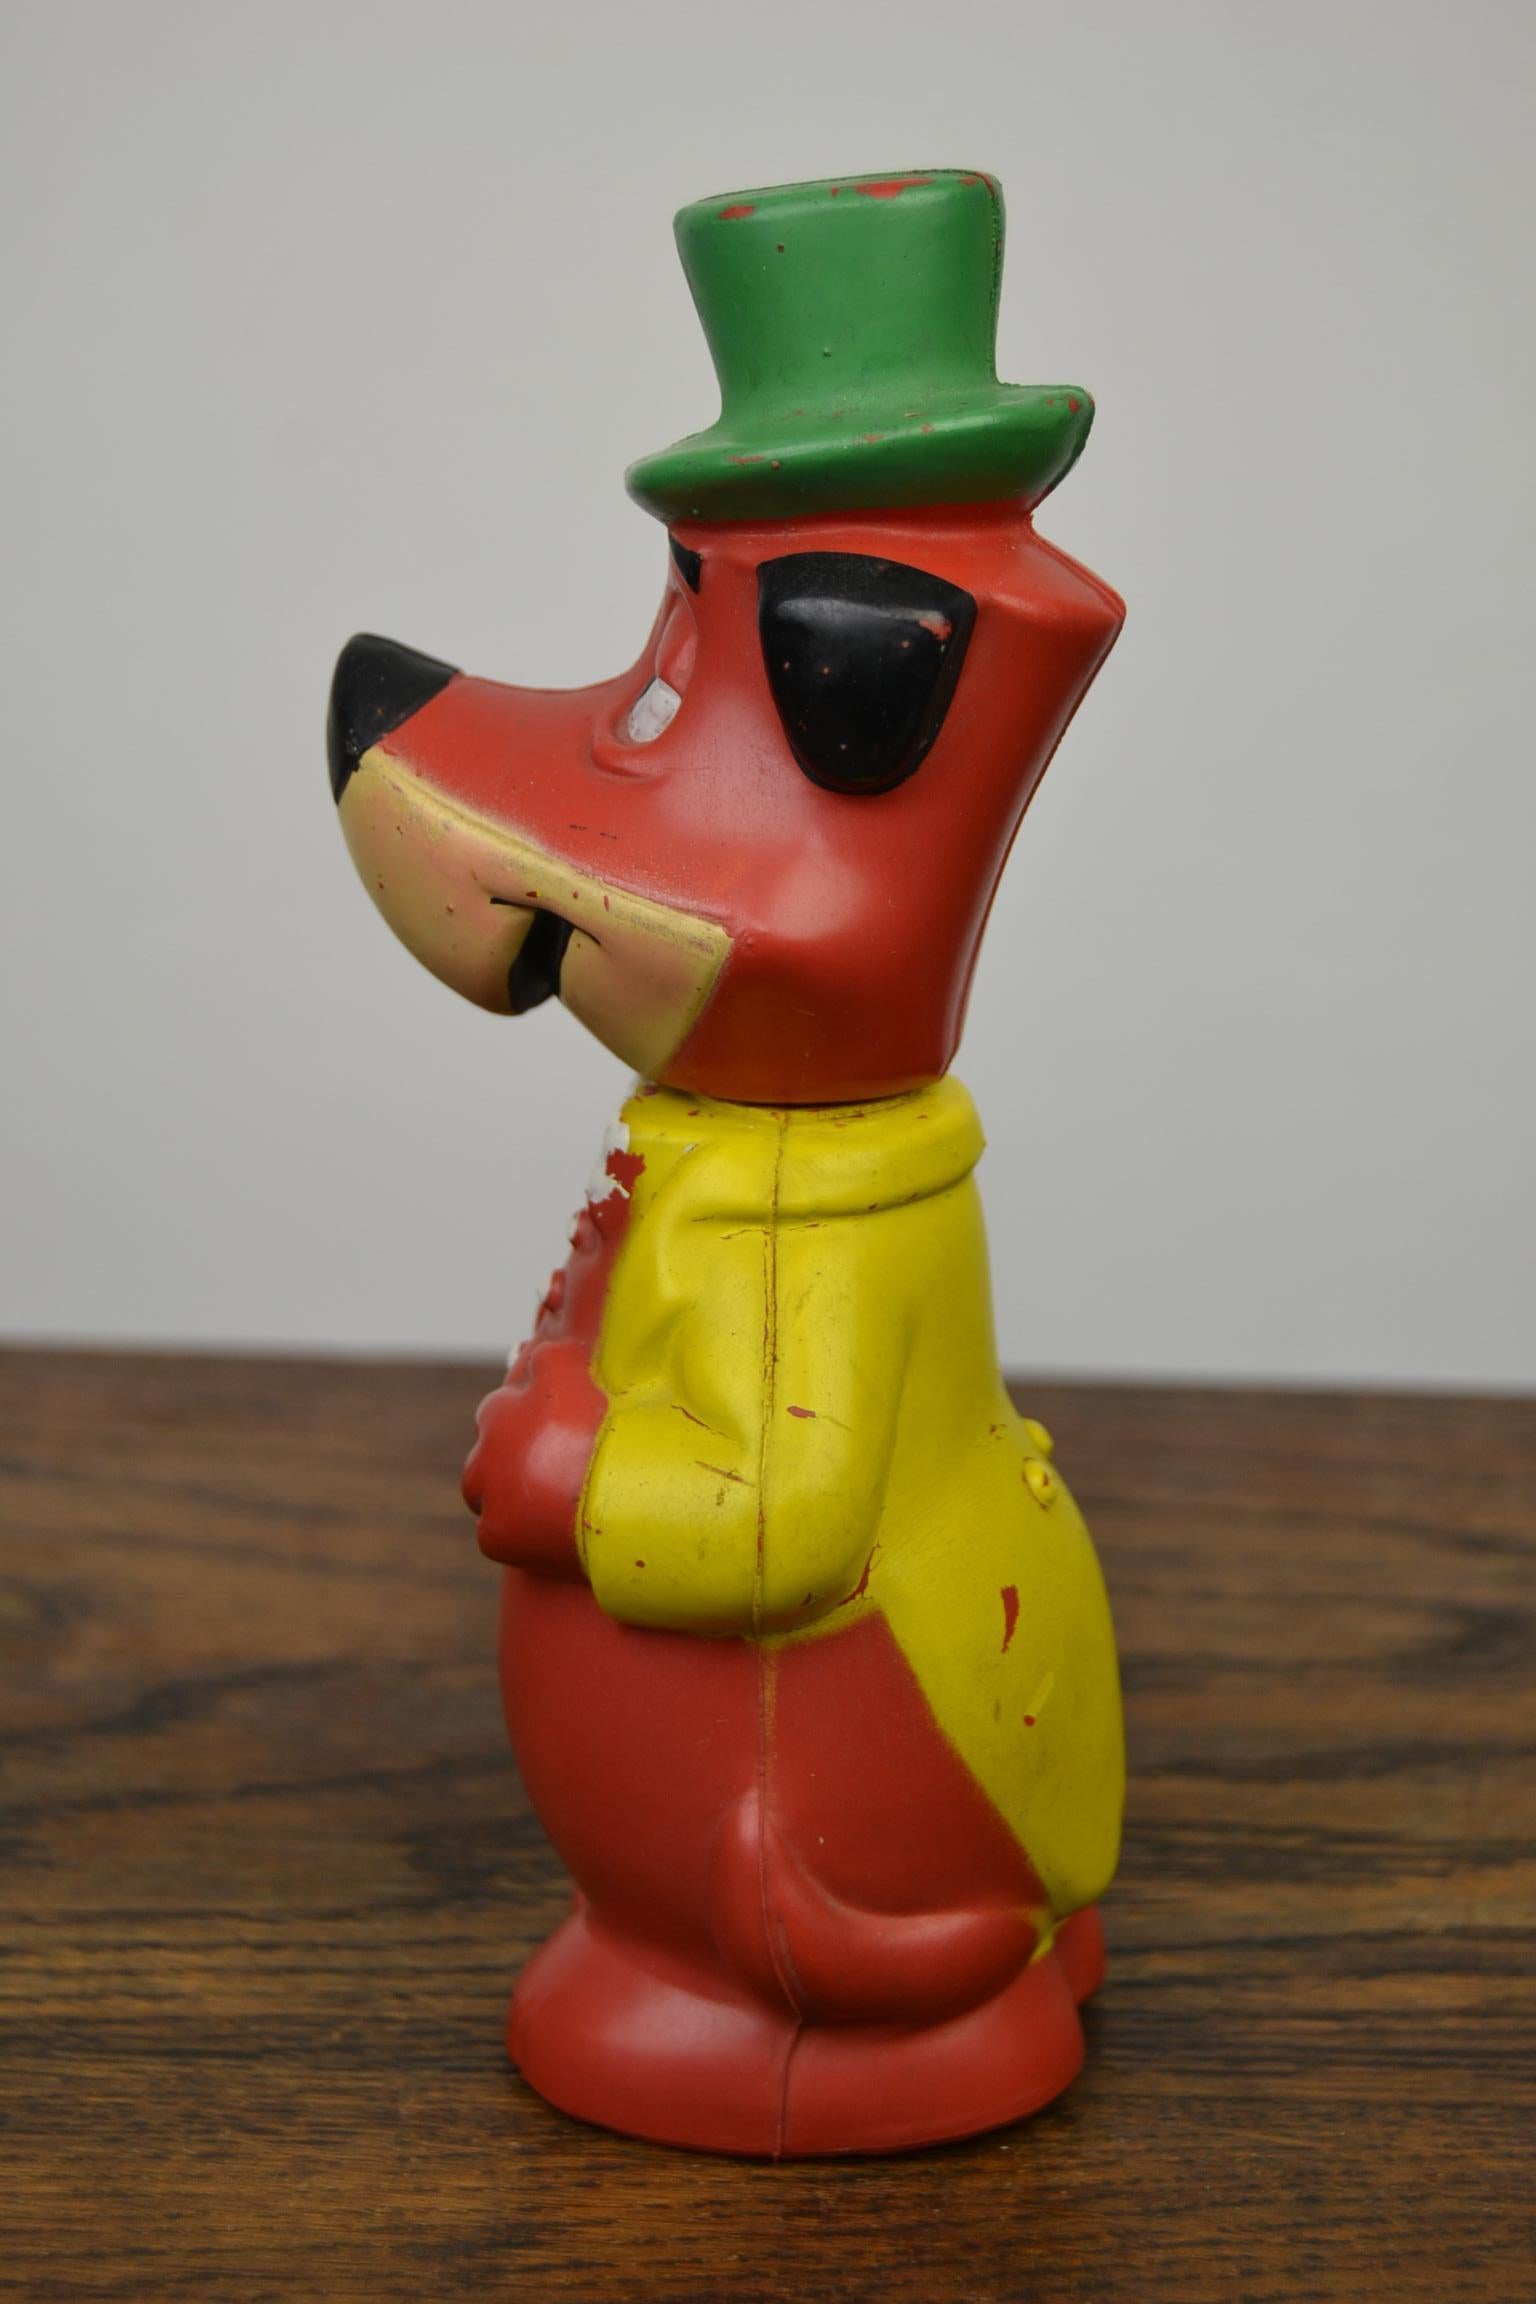 1965 Hanna Barbera Huckleberry Hound Figurine by Goebel, W.Germany 4